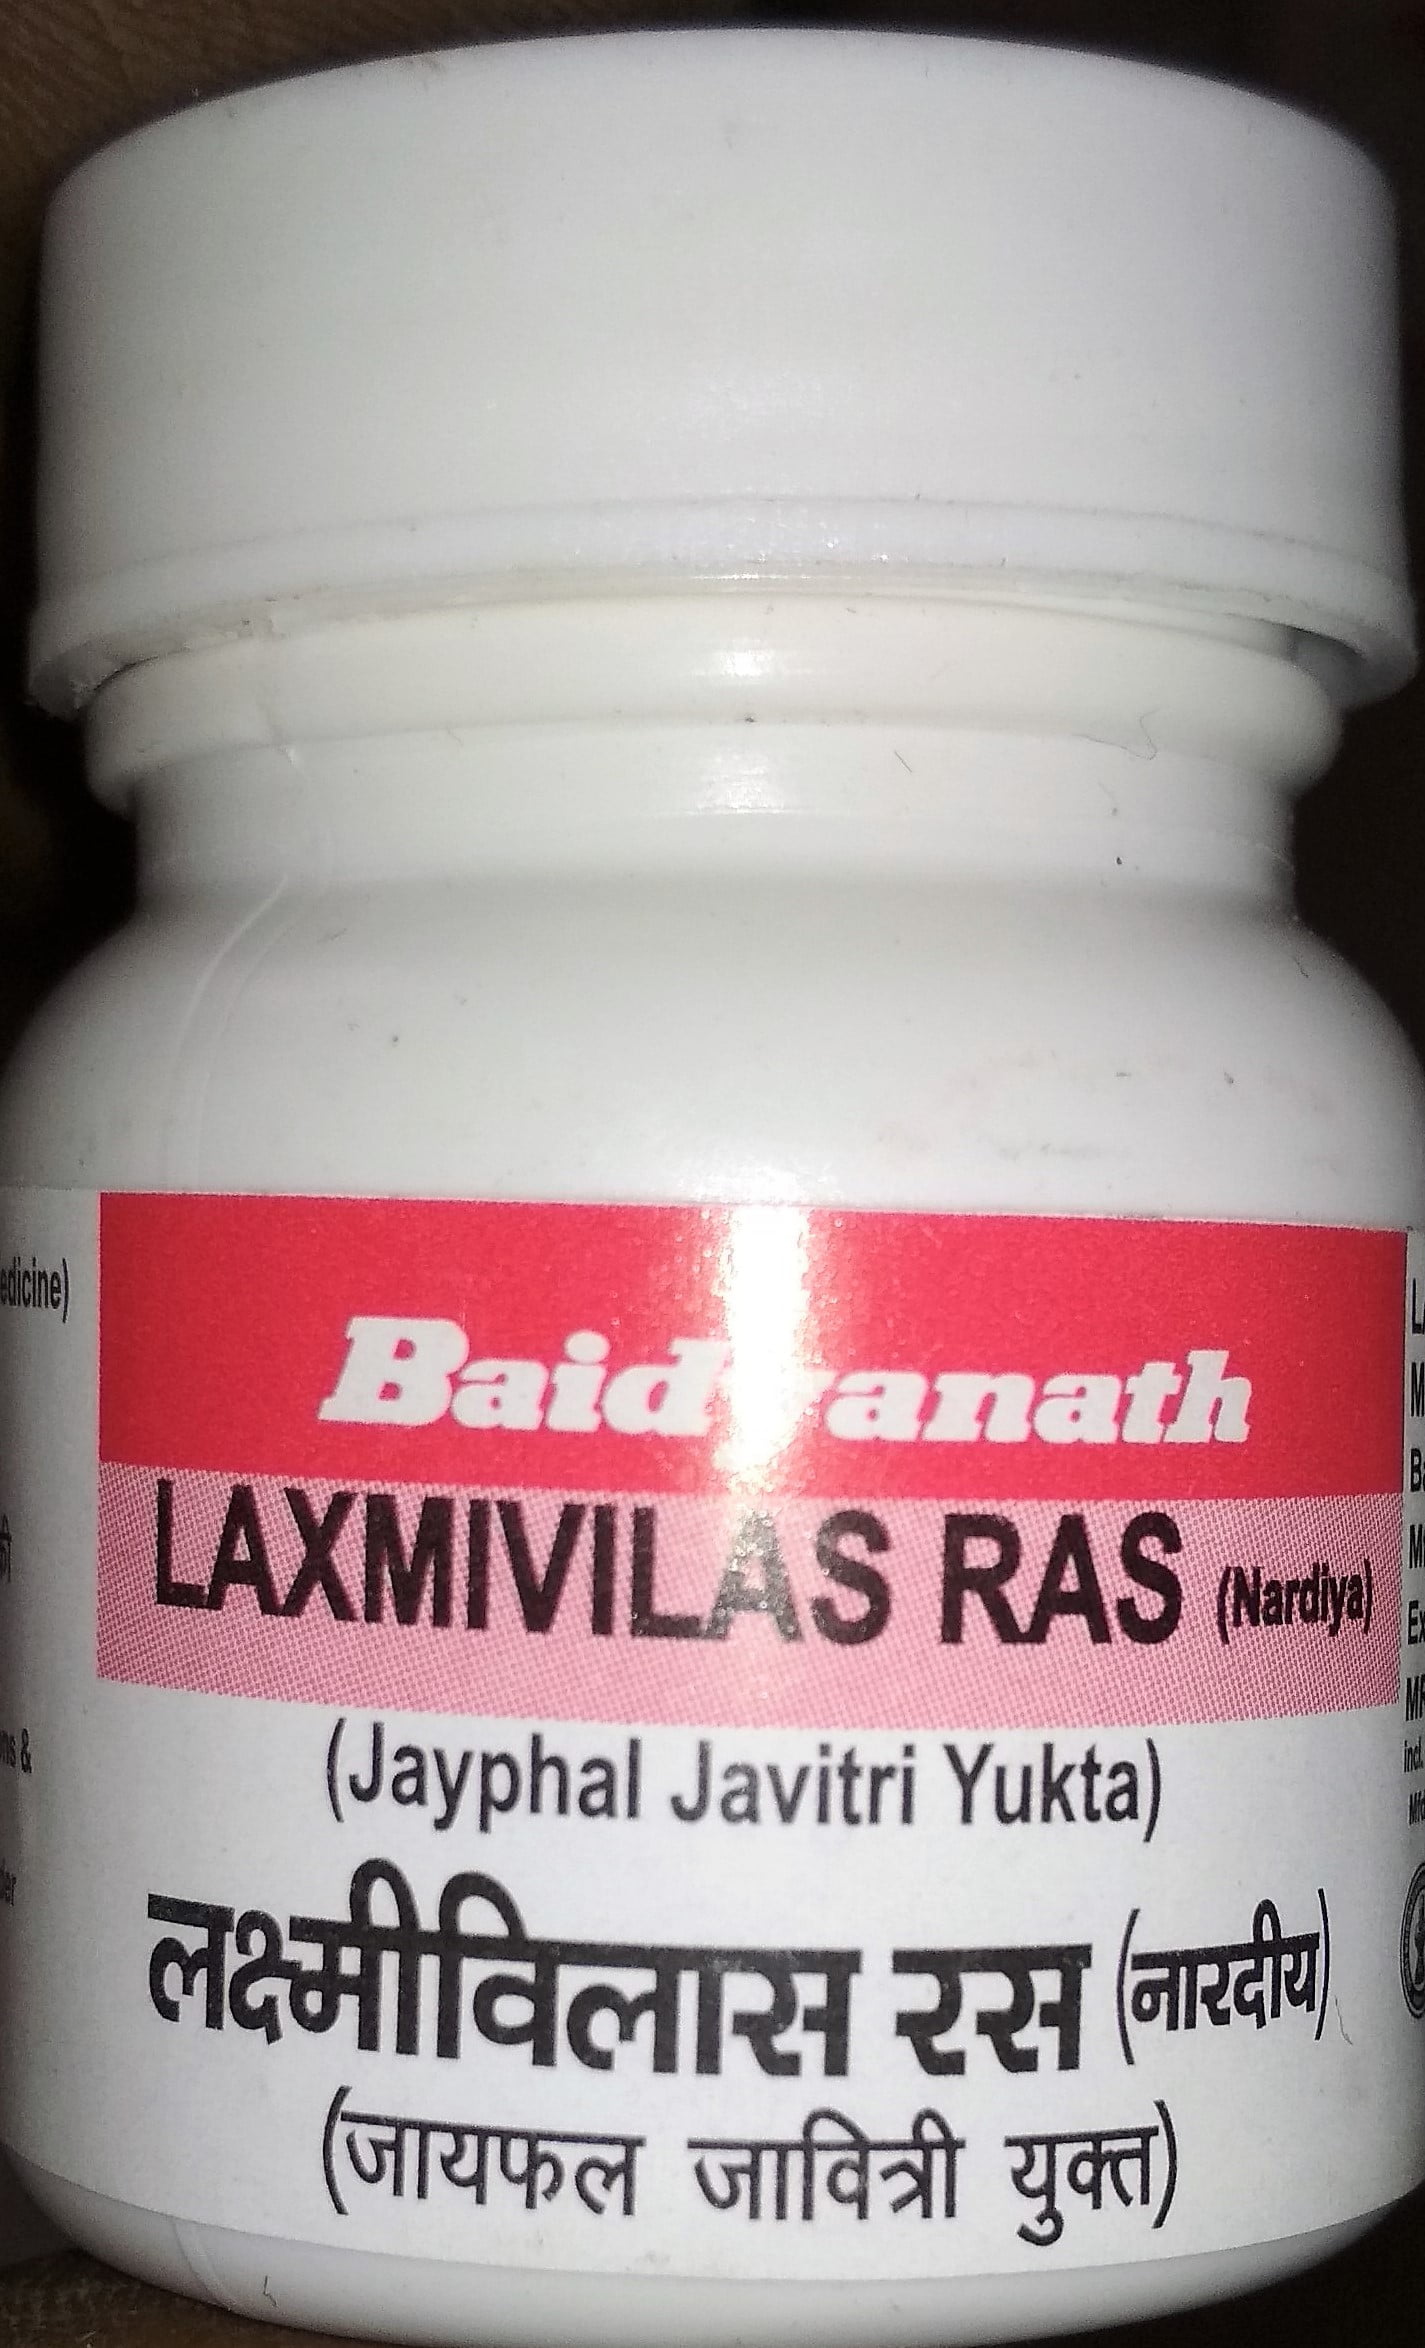 laxmivilas ras nardiya 40tab upto 20% off shree baidyanath ayurved bhavan